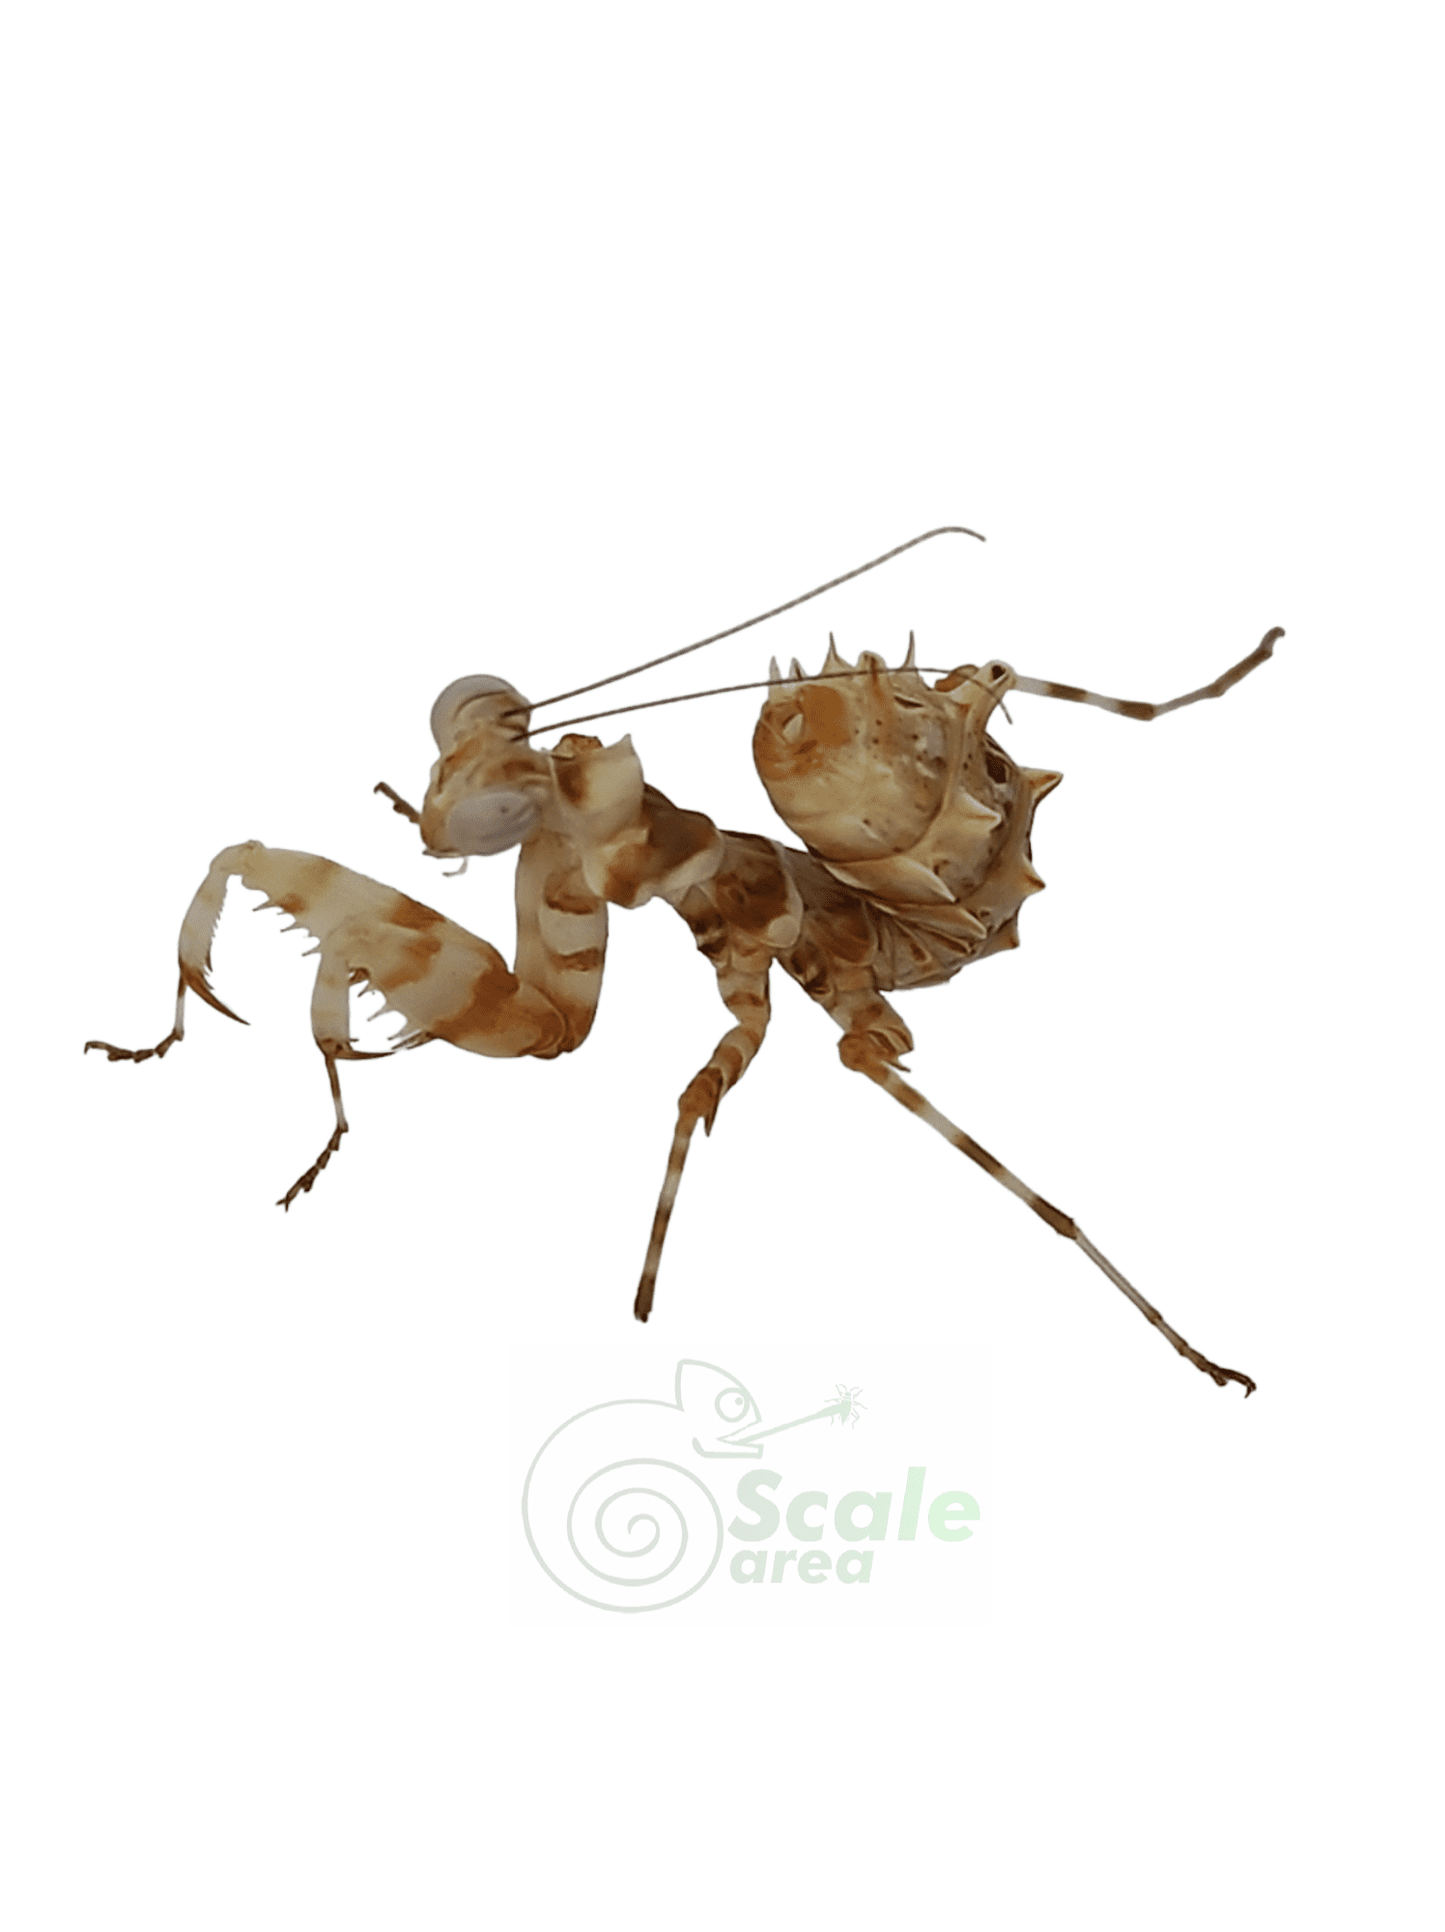 African Flower Mantis (Chlidonoptera lestoni)